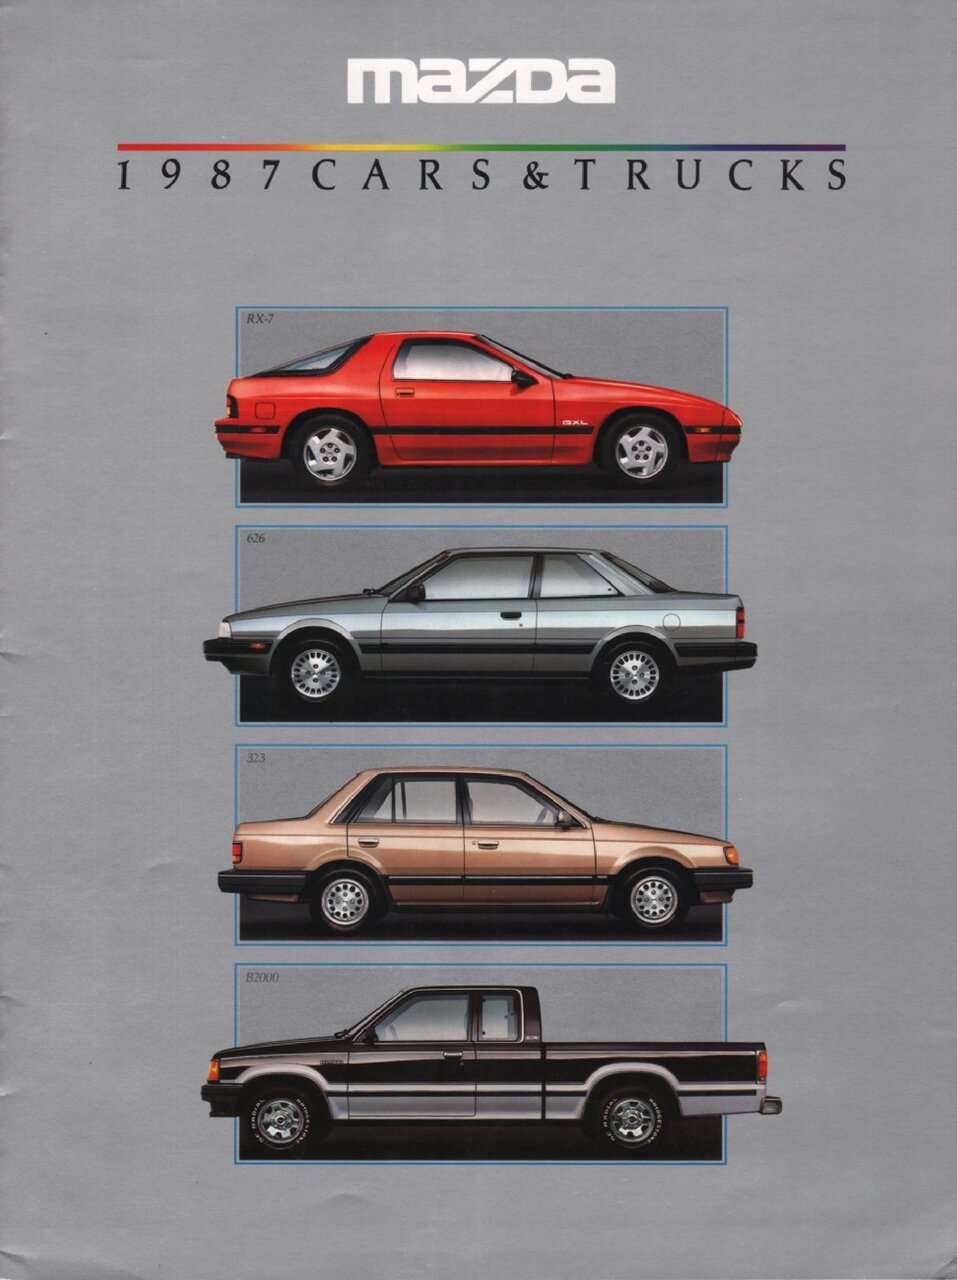 1987-Mazda-Full-Line-page-001.jpg